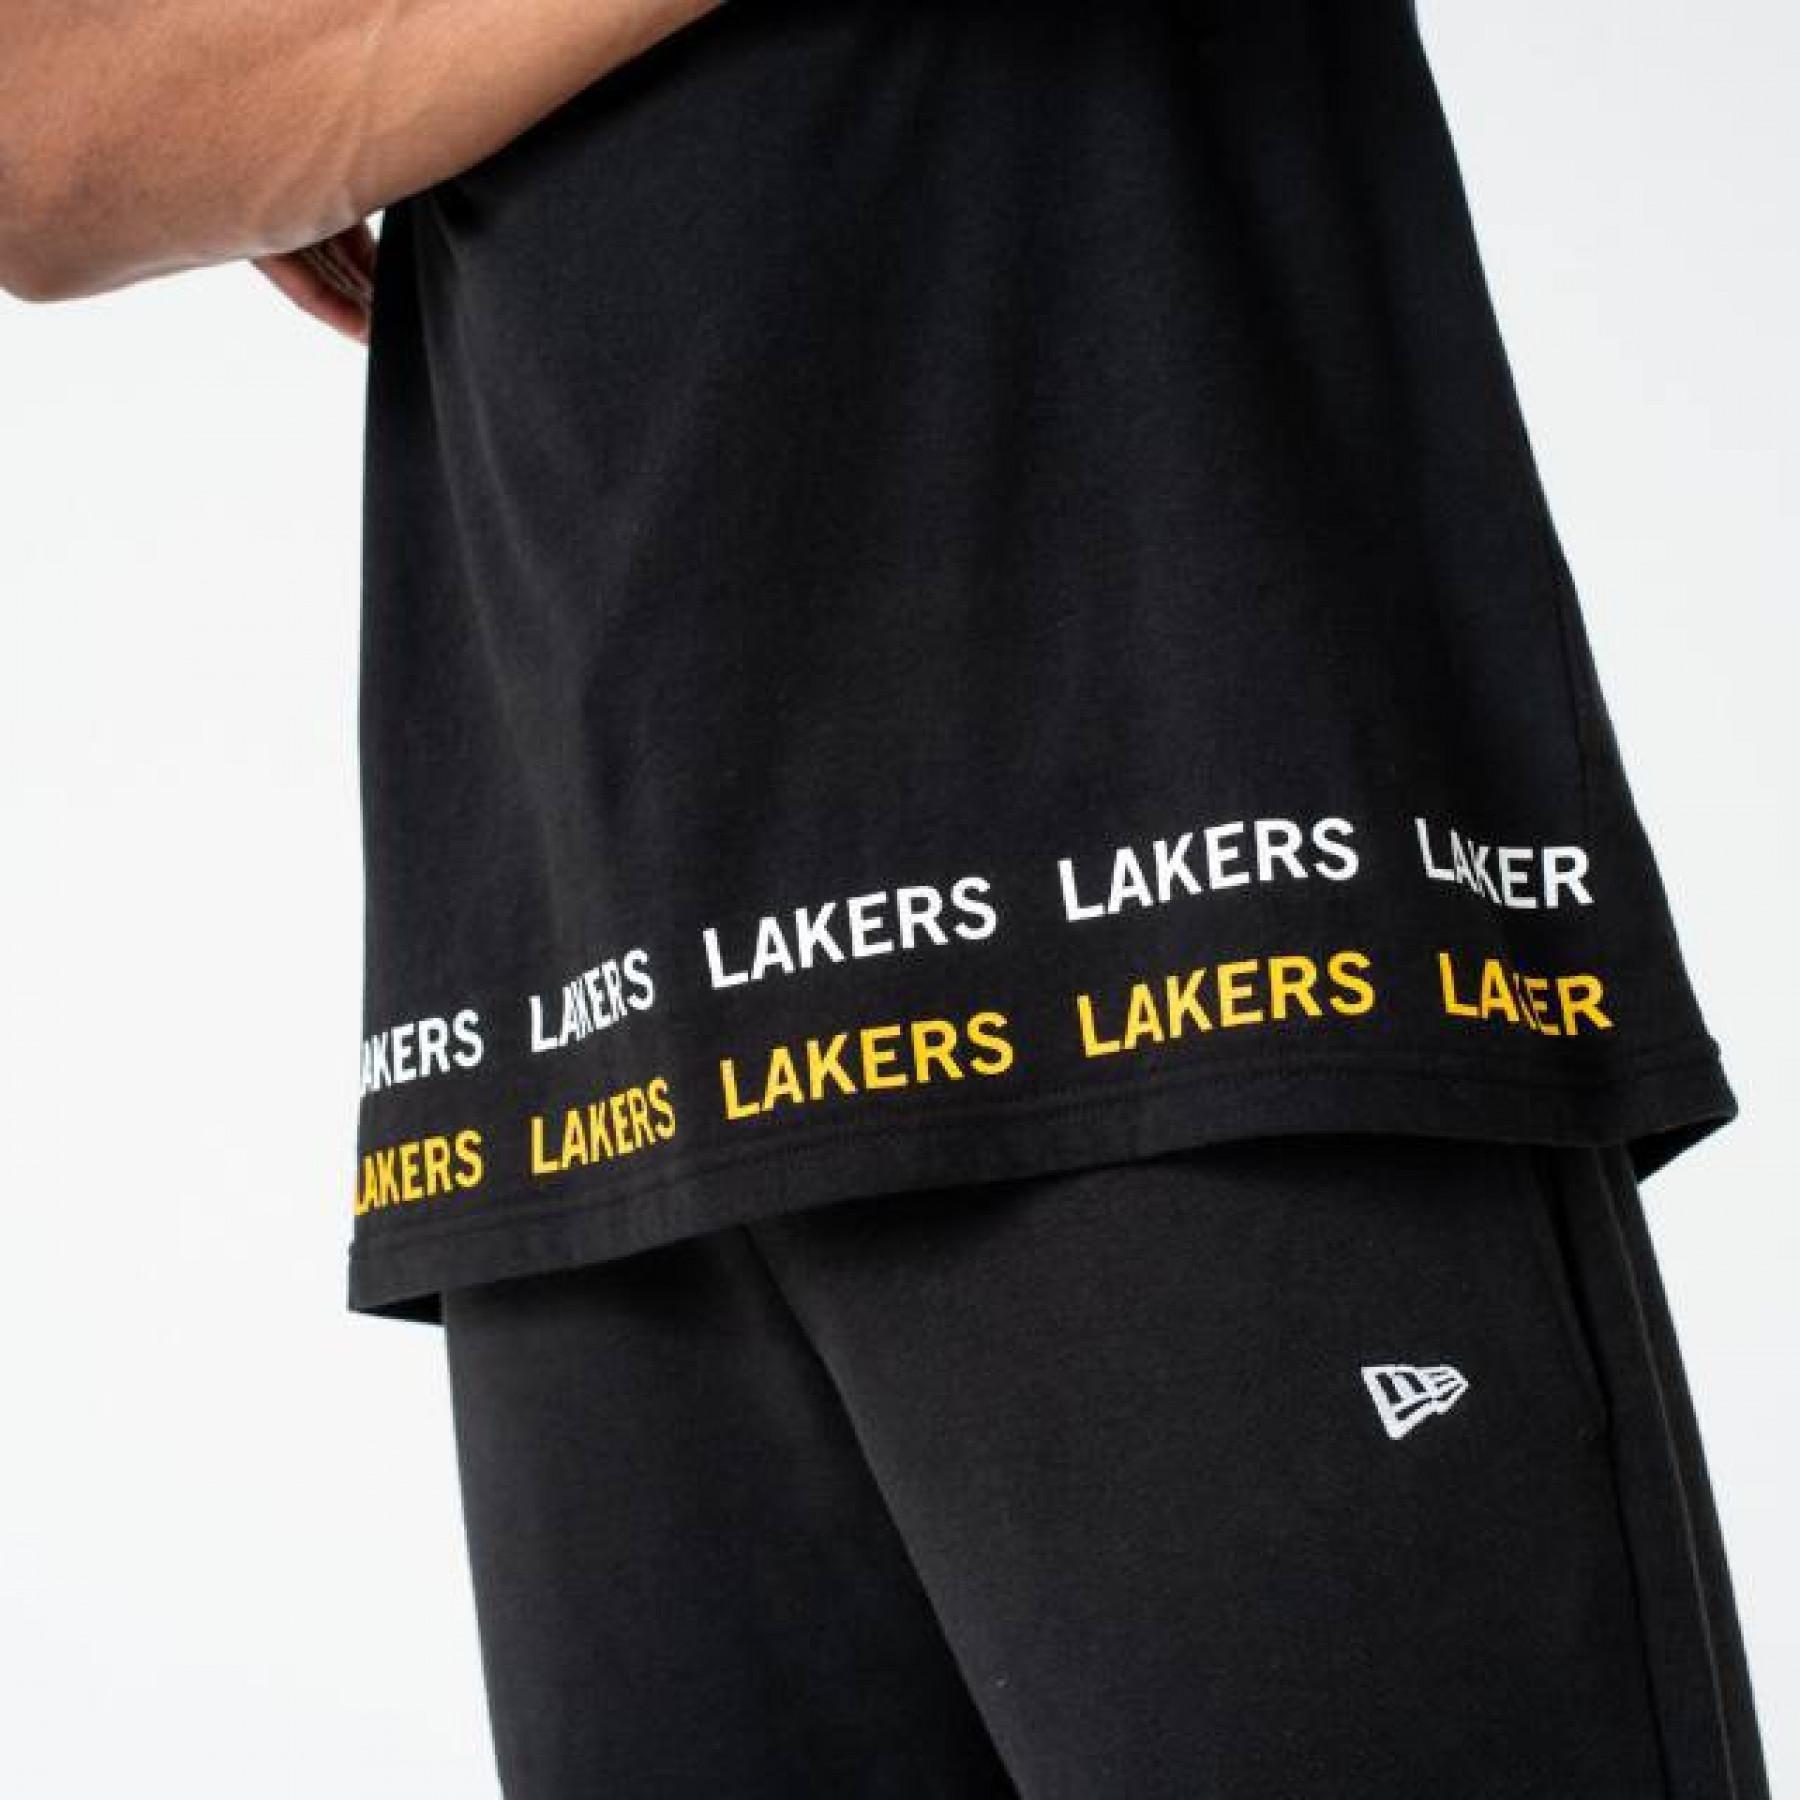  New EraT - s h i r t   Wrap Around T Los Angeles Lakers